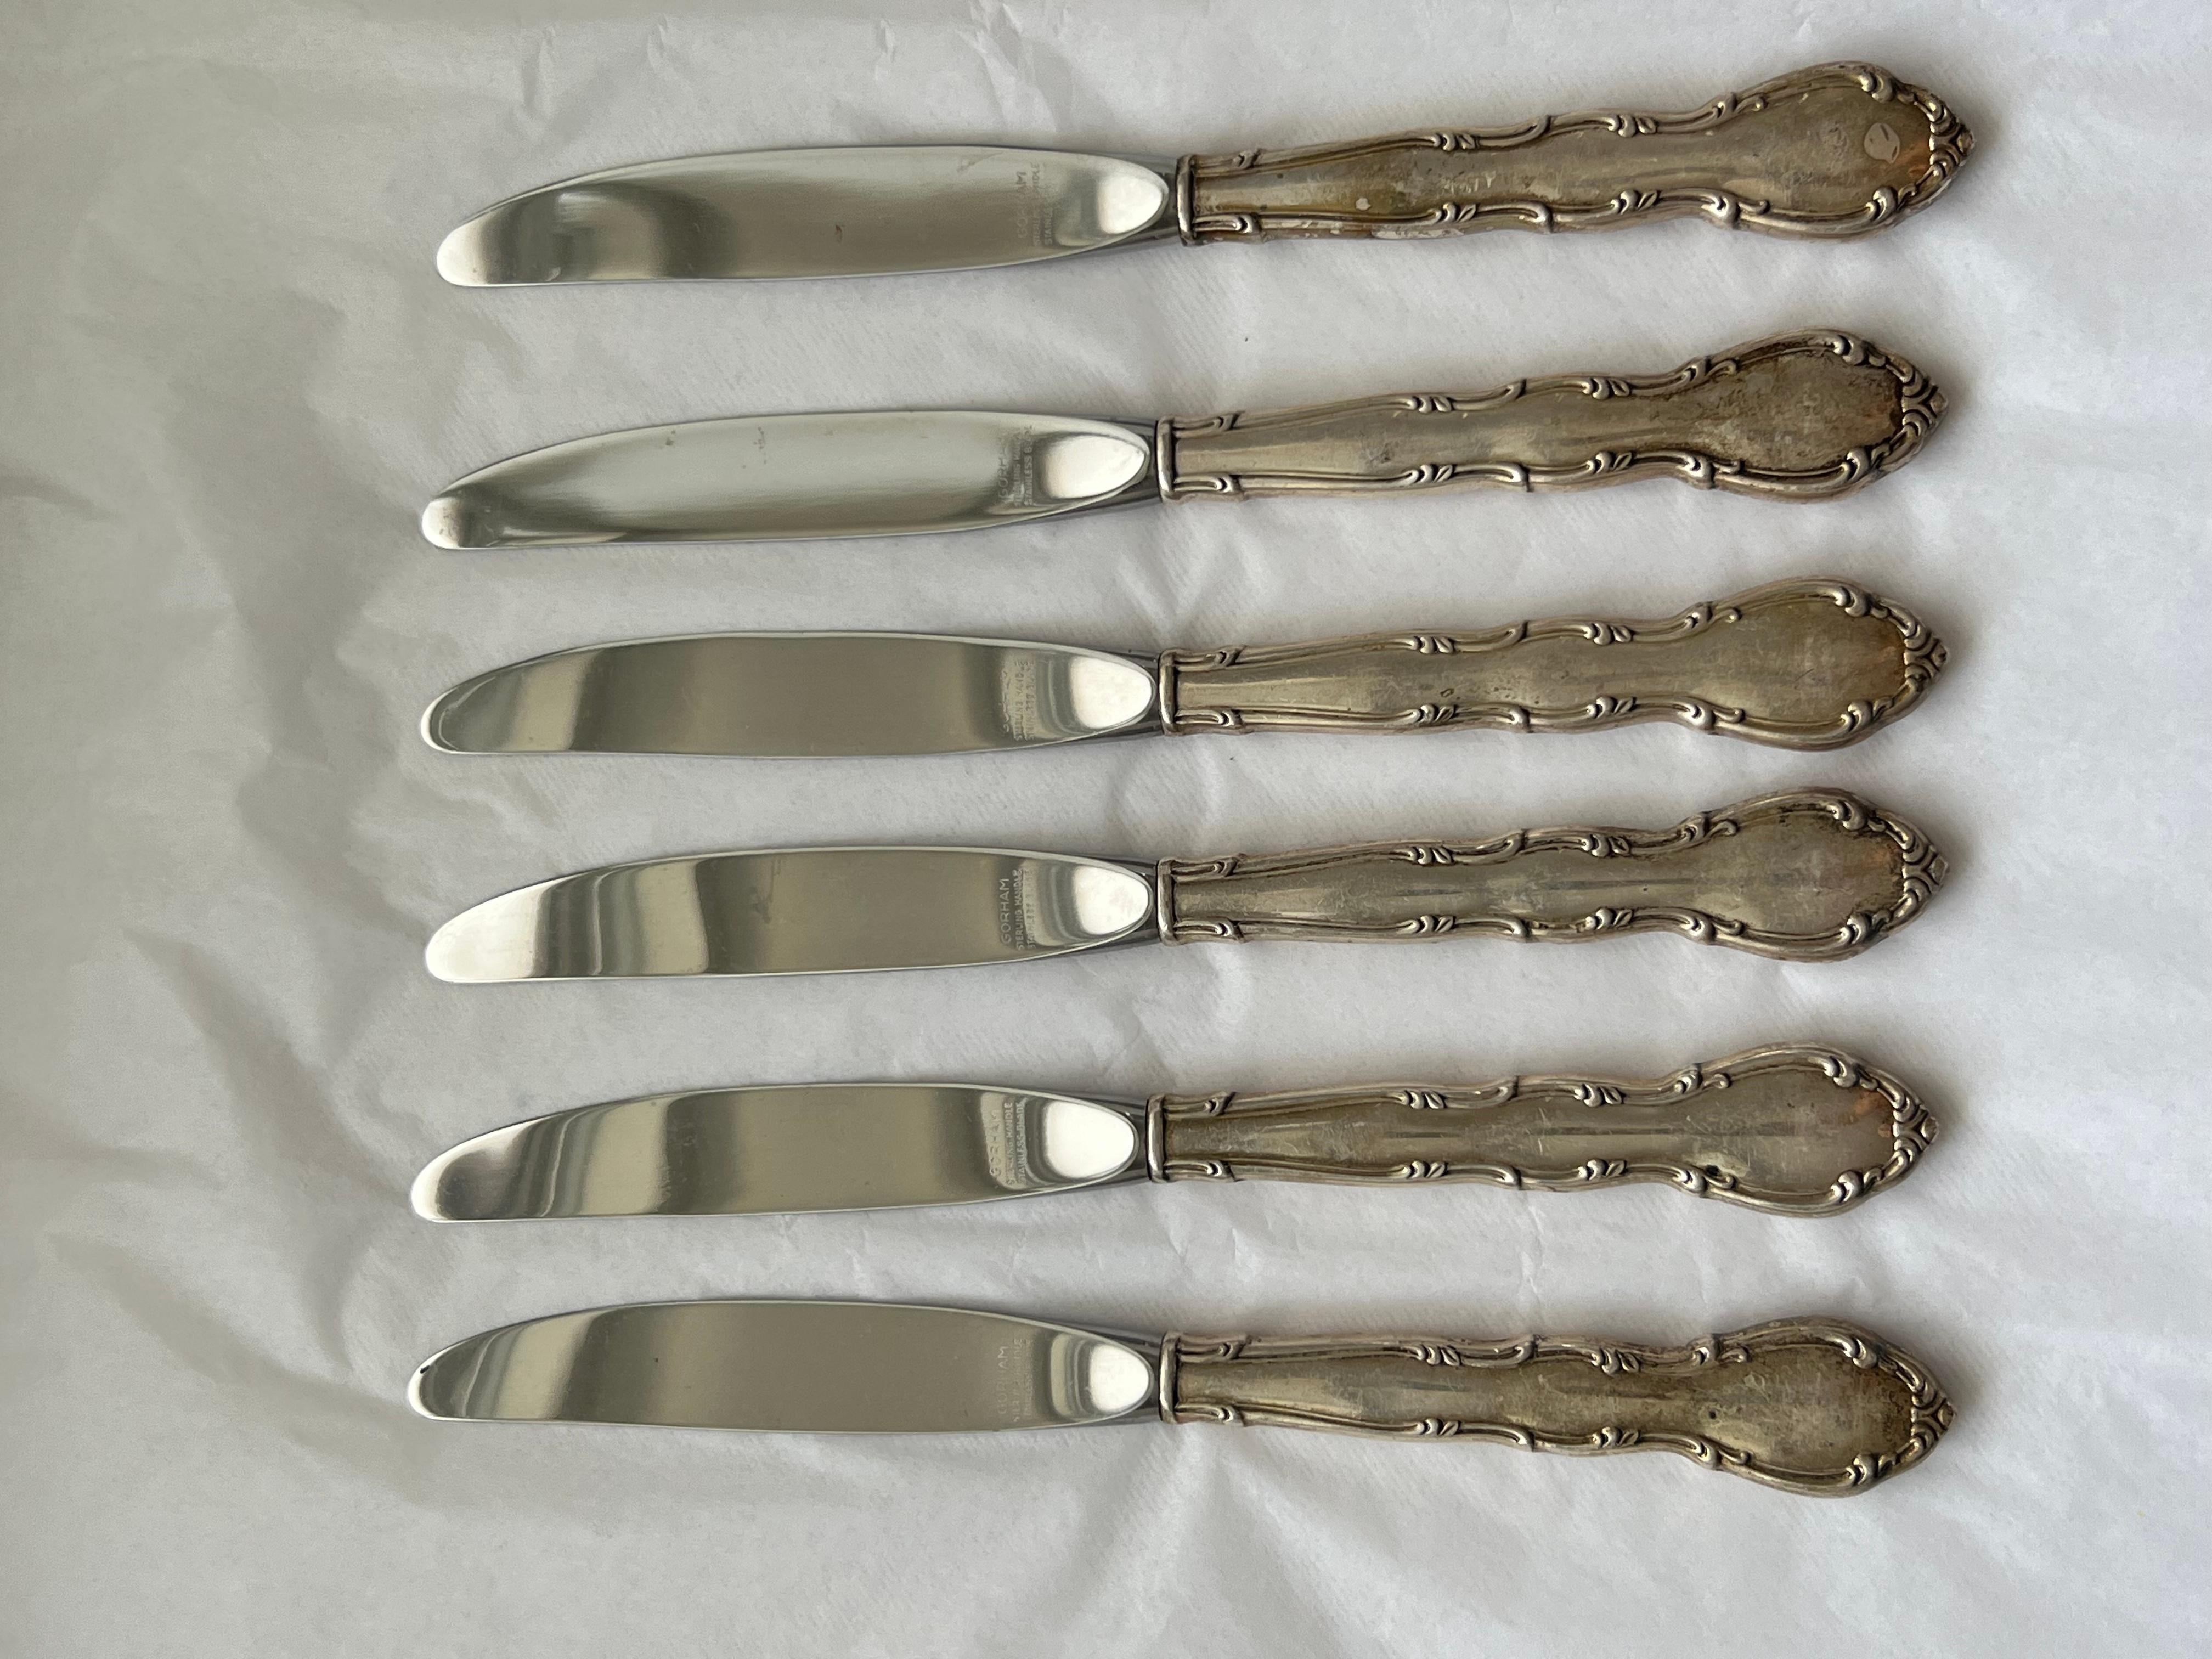 6 knives set (15.6 oz)